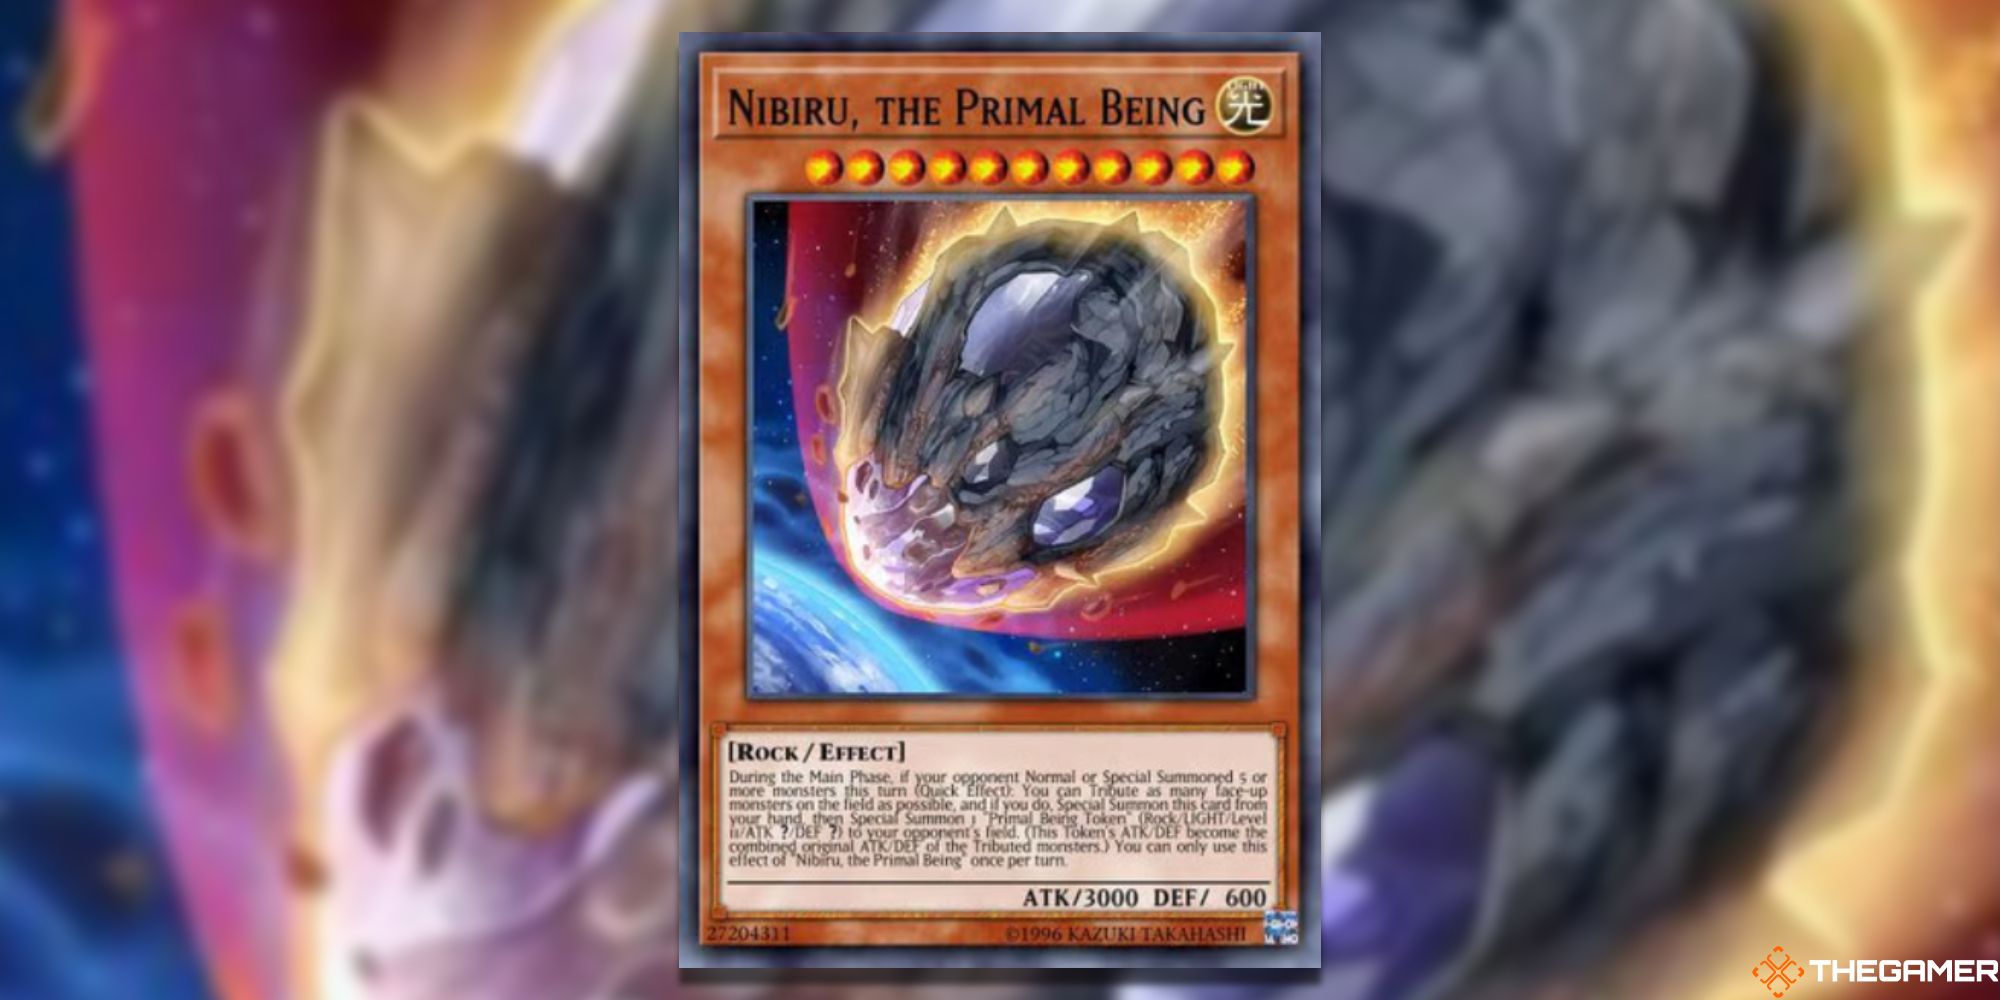 Yu-Gi-Oh! Nibiru, The Primal Being on blurred background